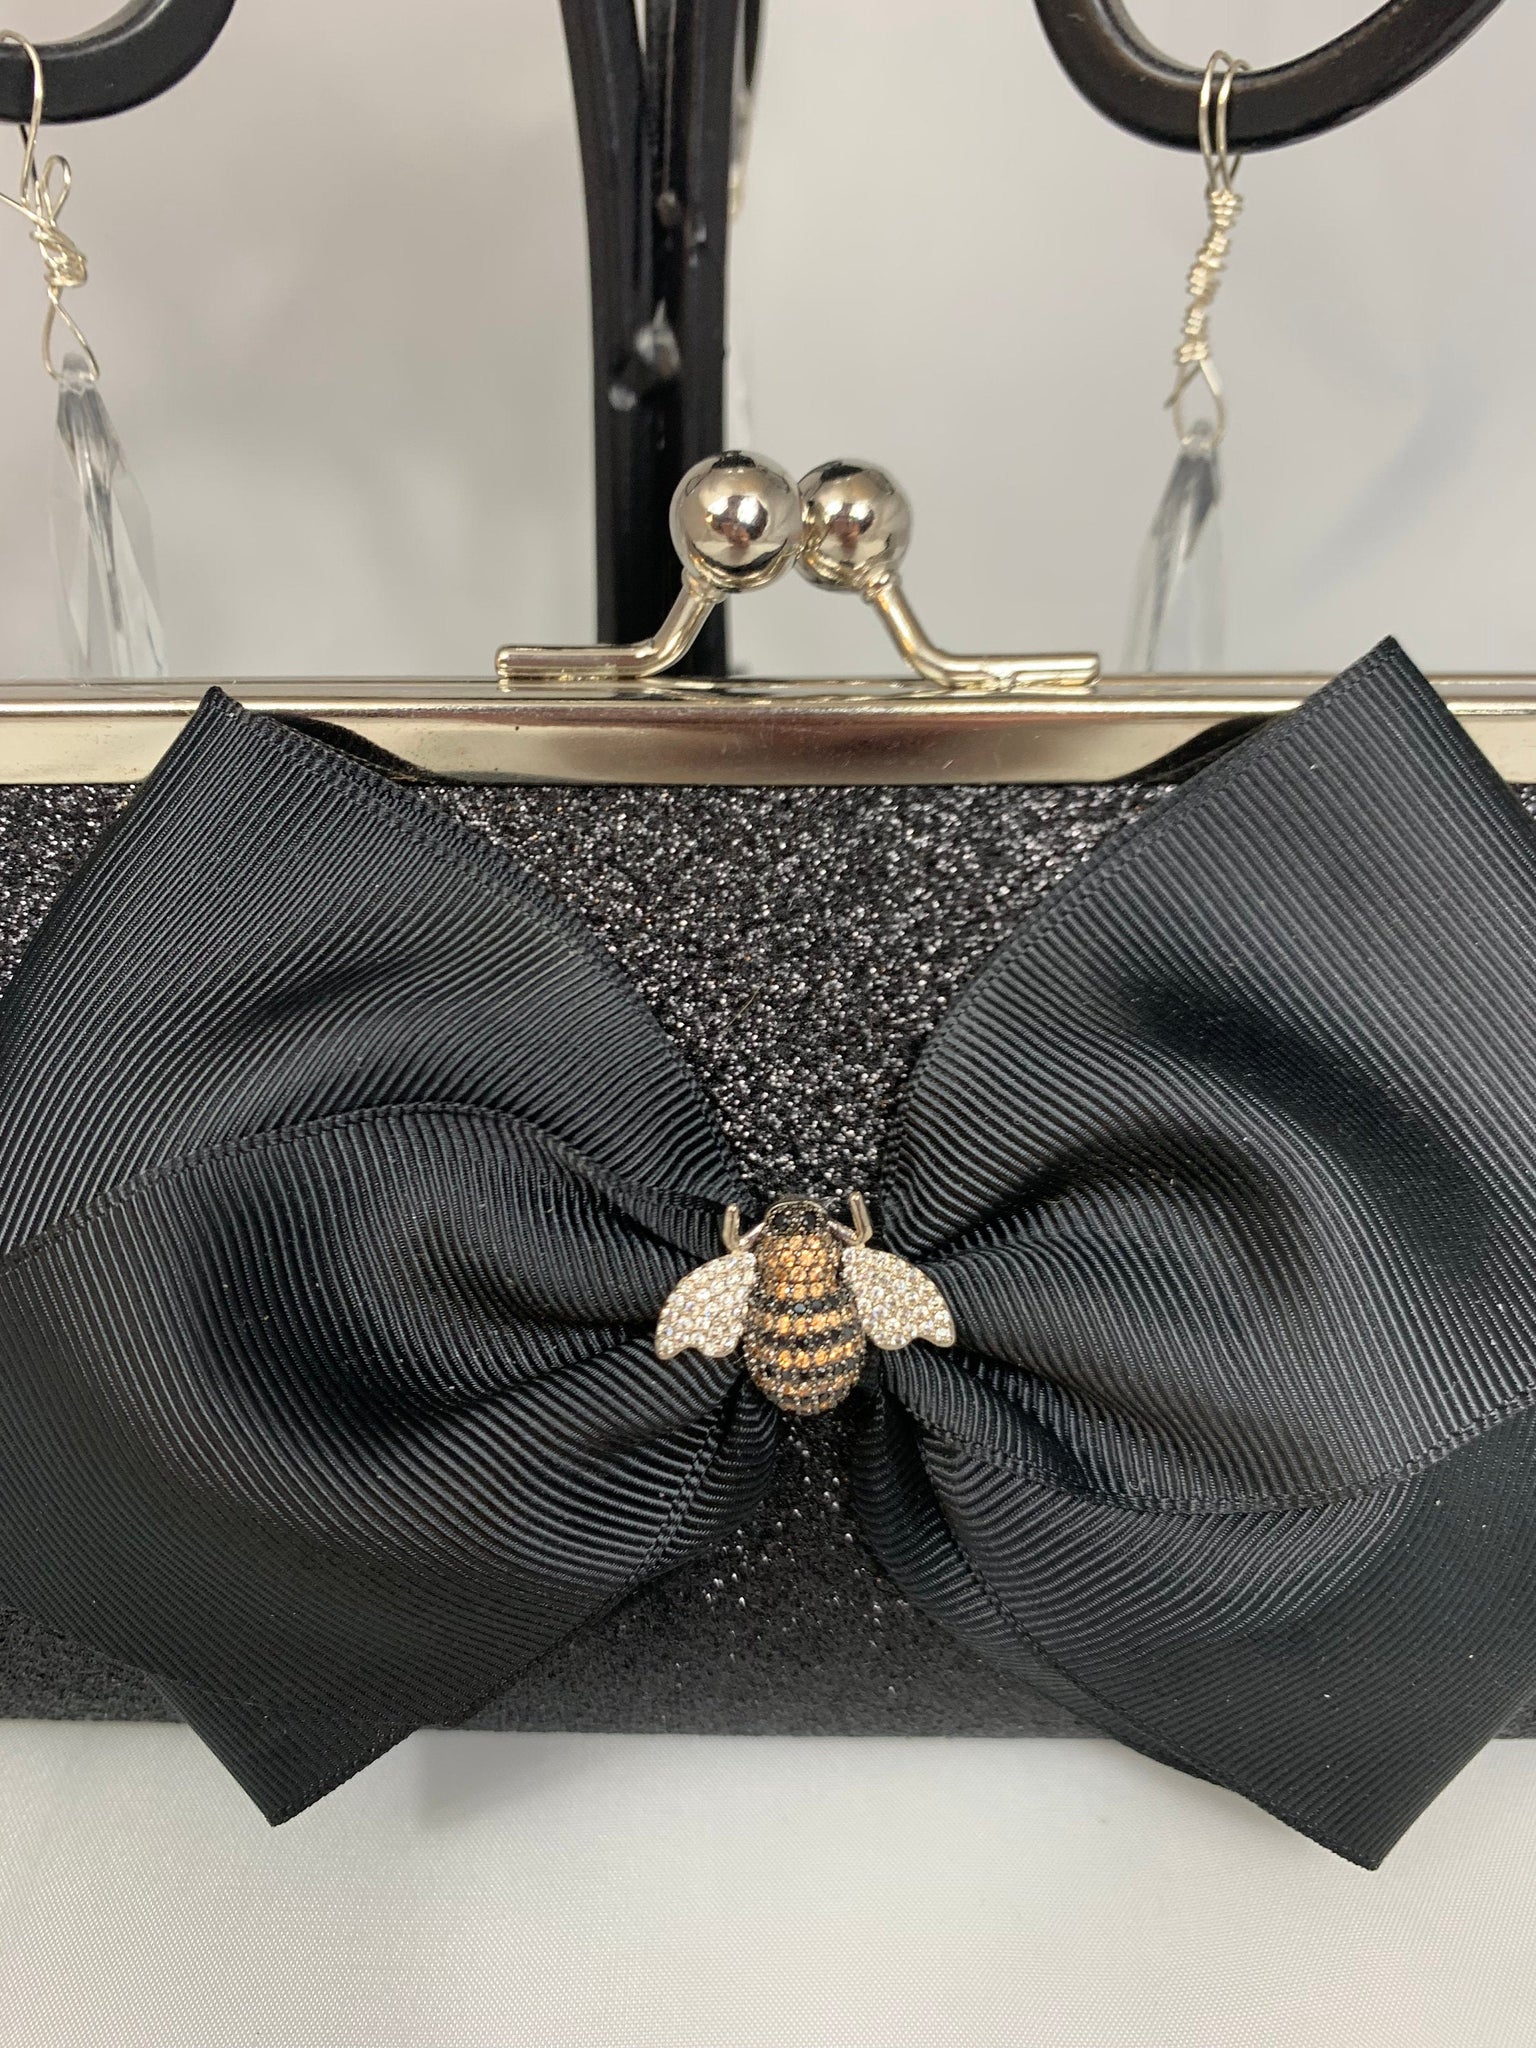 Little black cat clutch purse | misala